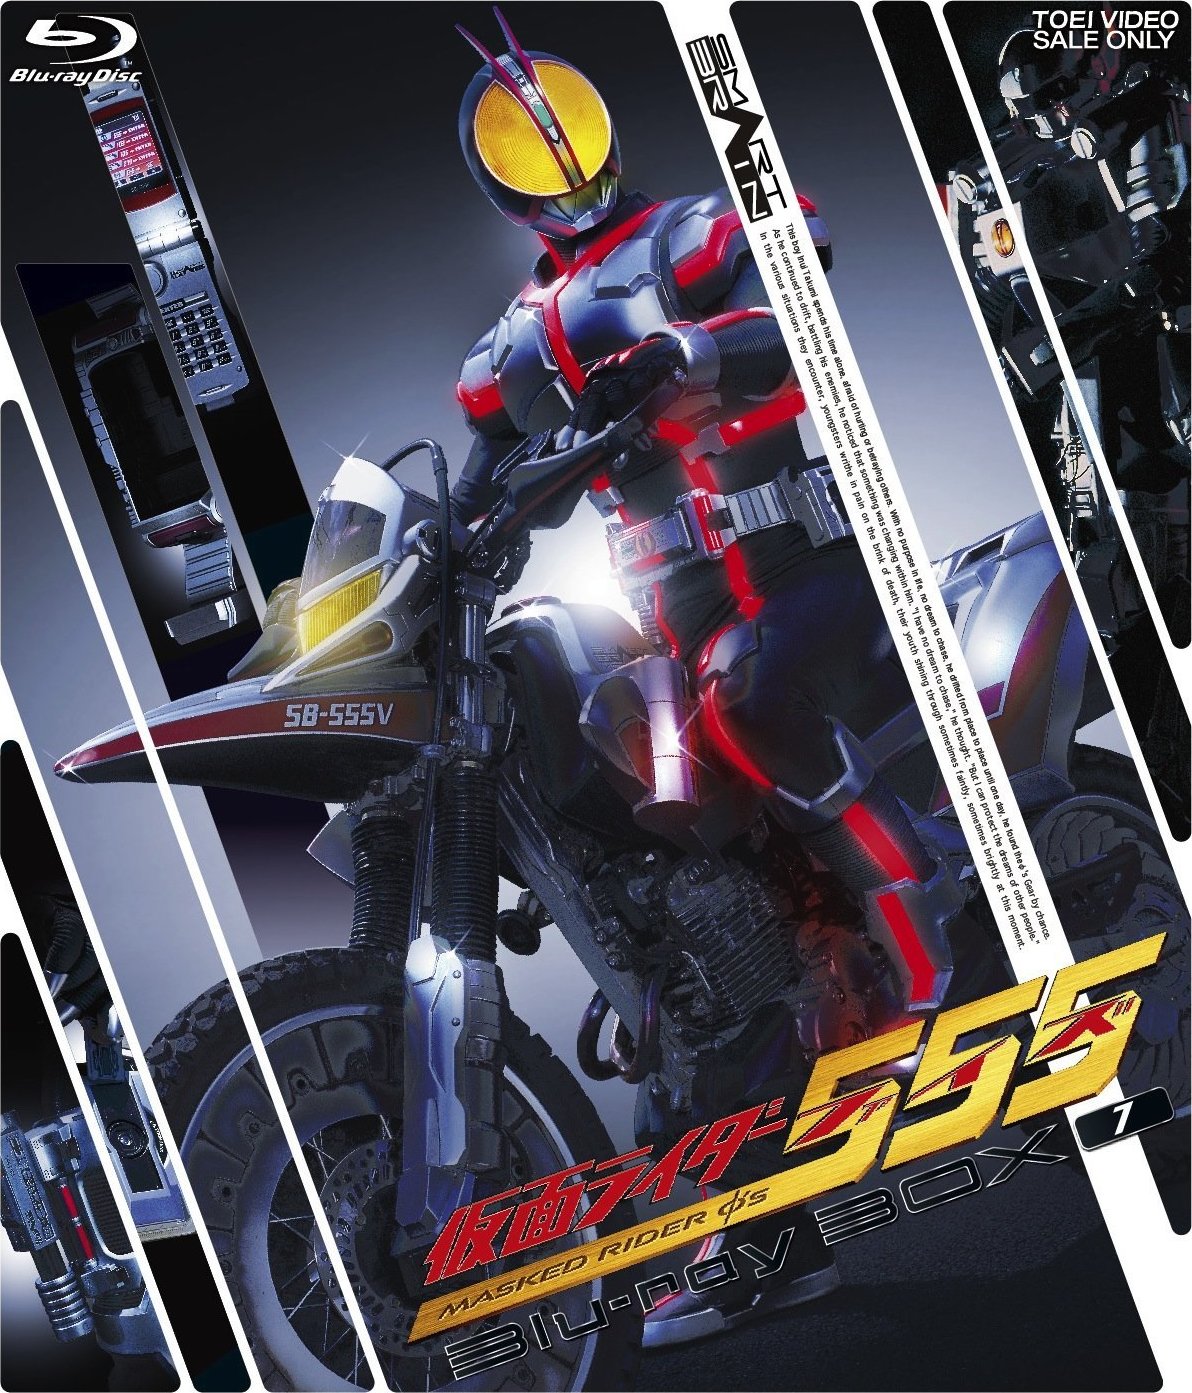 Kamen Rider 555 Blu-ray BOX 1 Blu-ray (Japan)